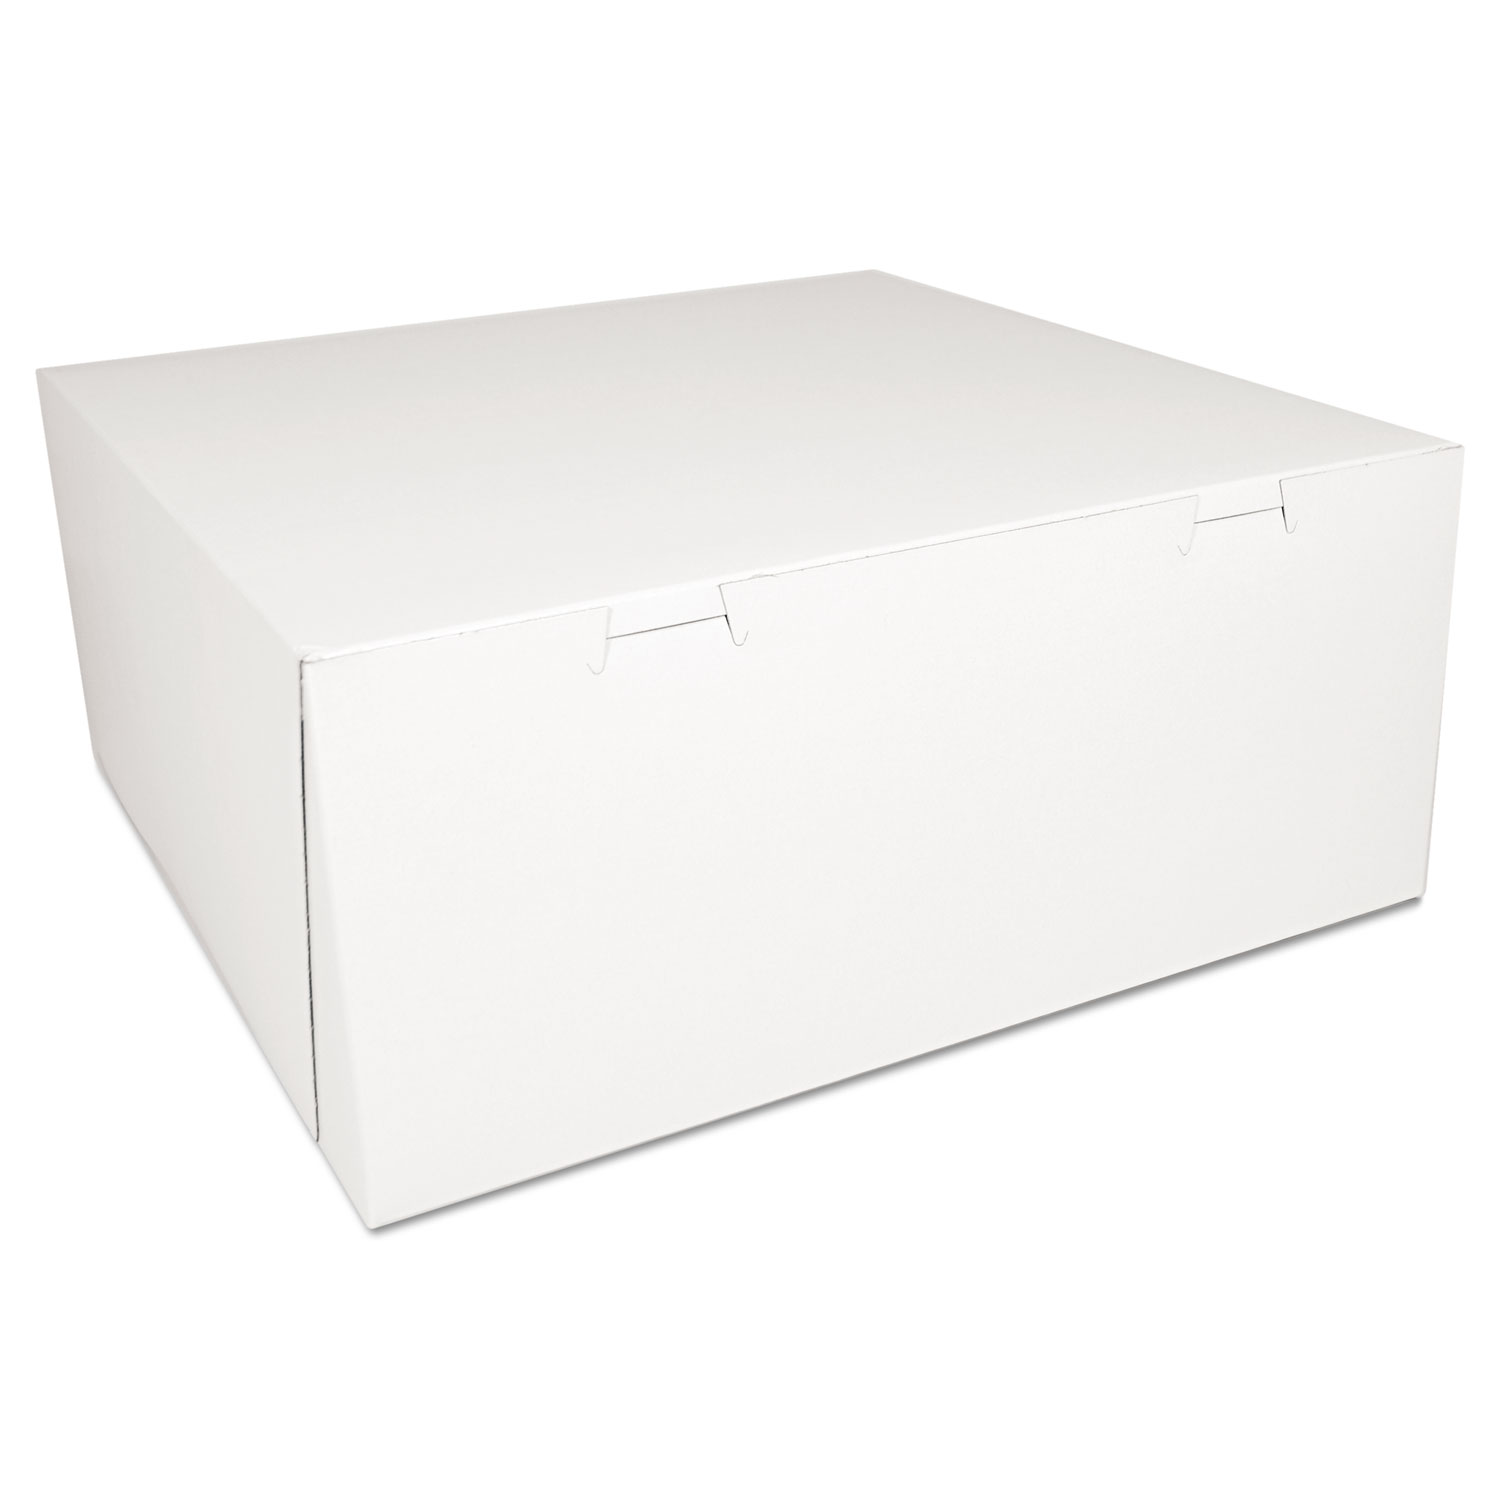  SCT SCH 0993 Bakery Boxes, White, Paperboard,14 x 14 x 6, 50/Carton (SCH0993) 